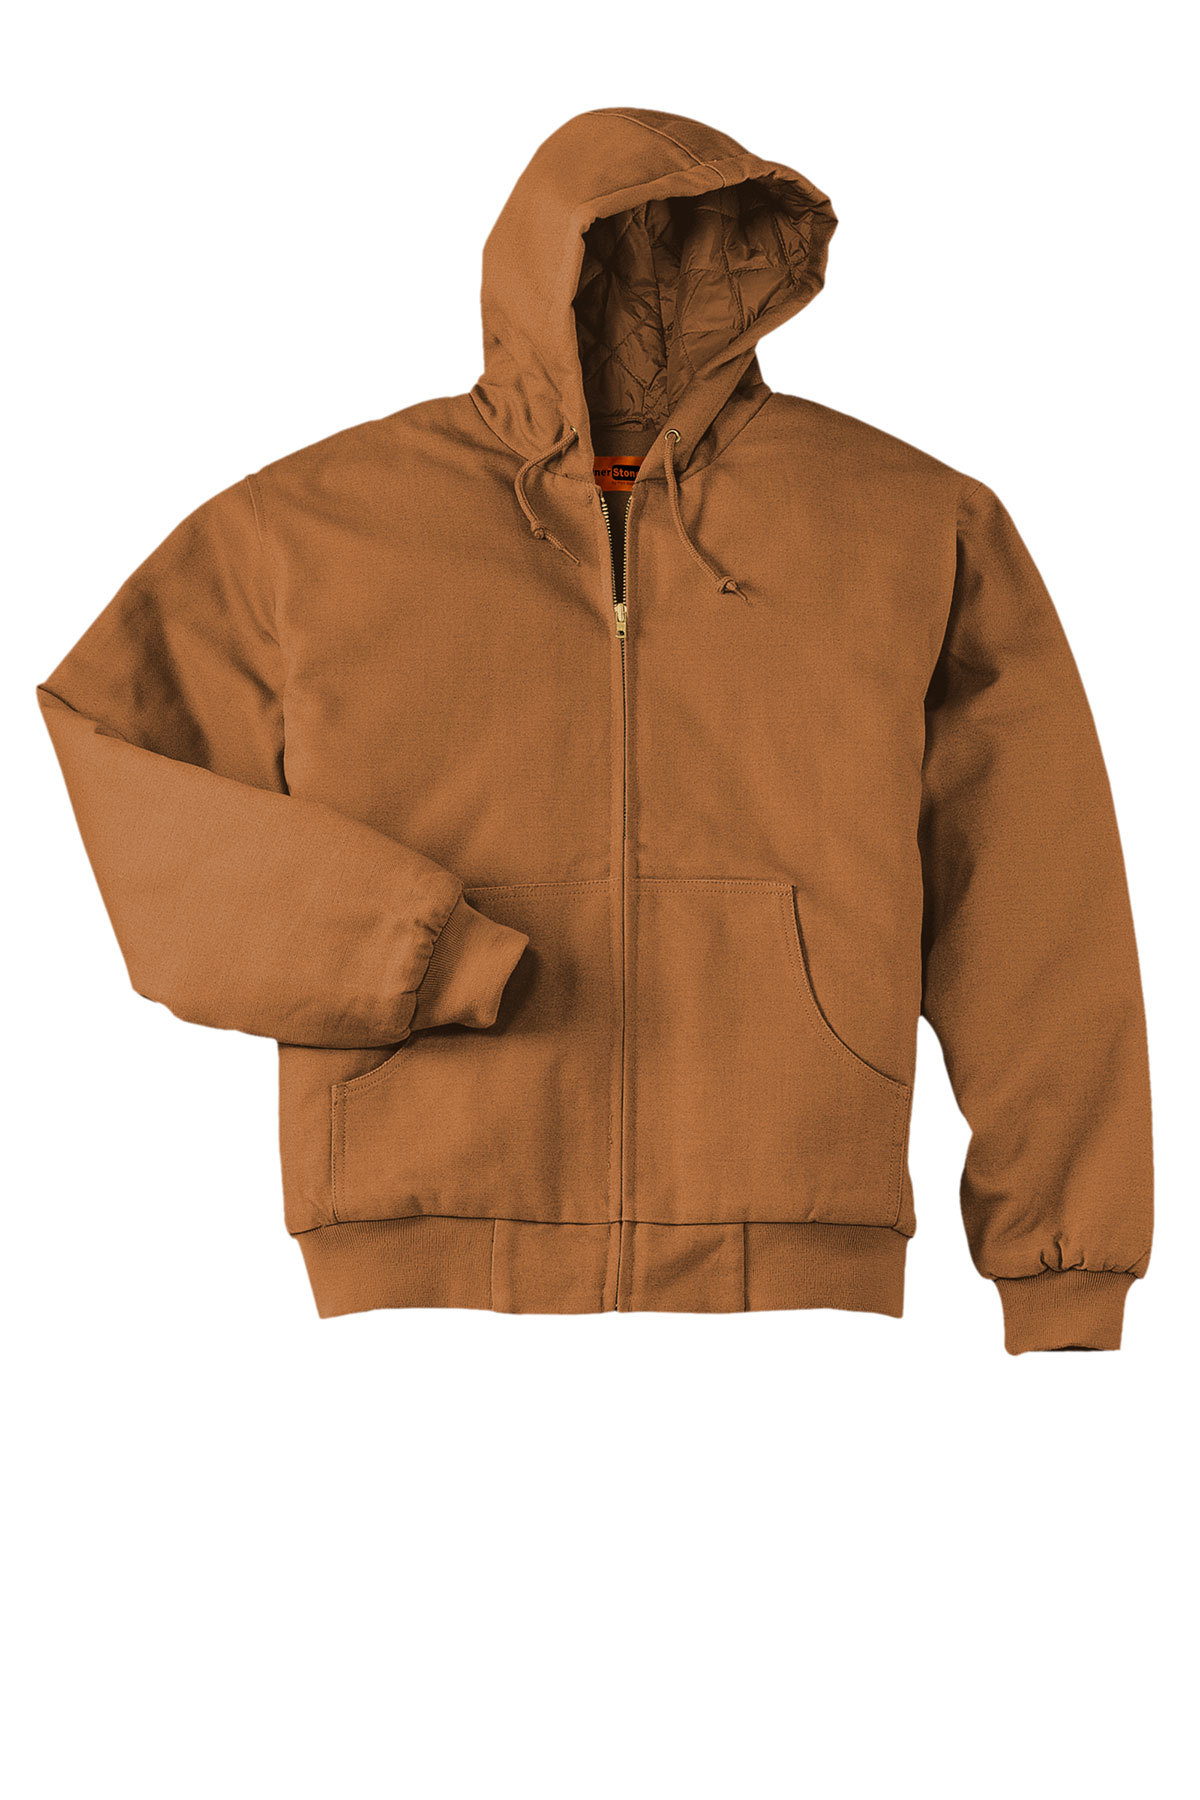 CornerStone - Duck Cloth Hooded Work Jacket | Product | CornerStone